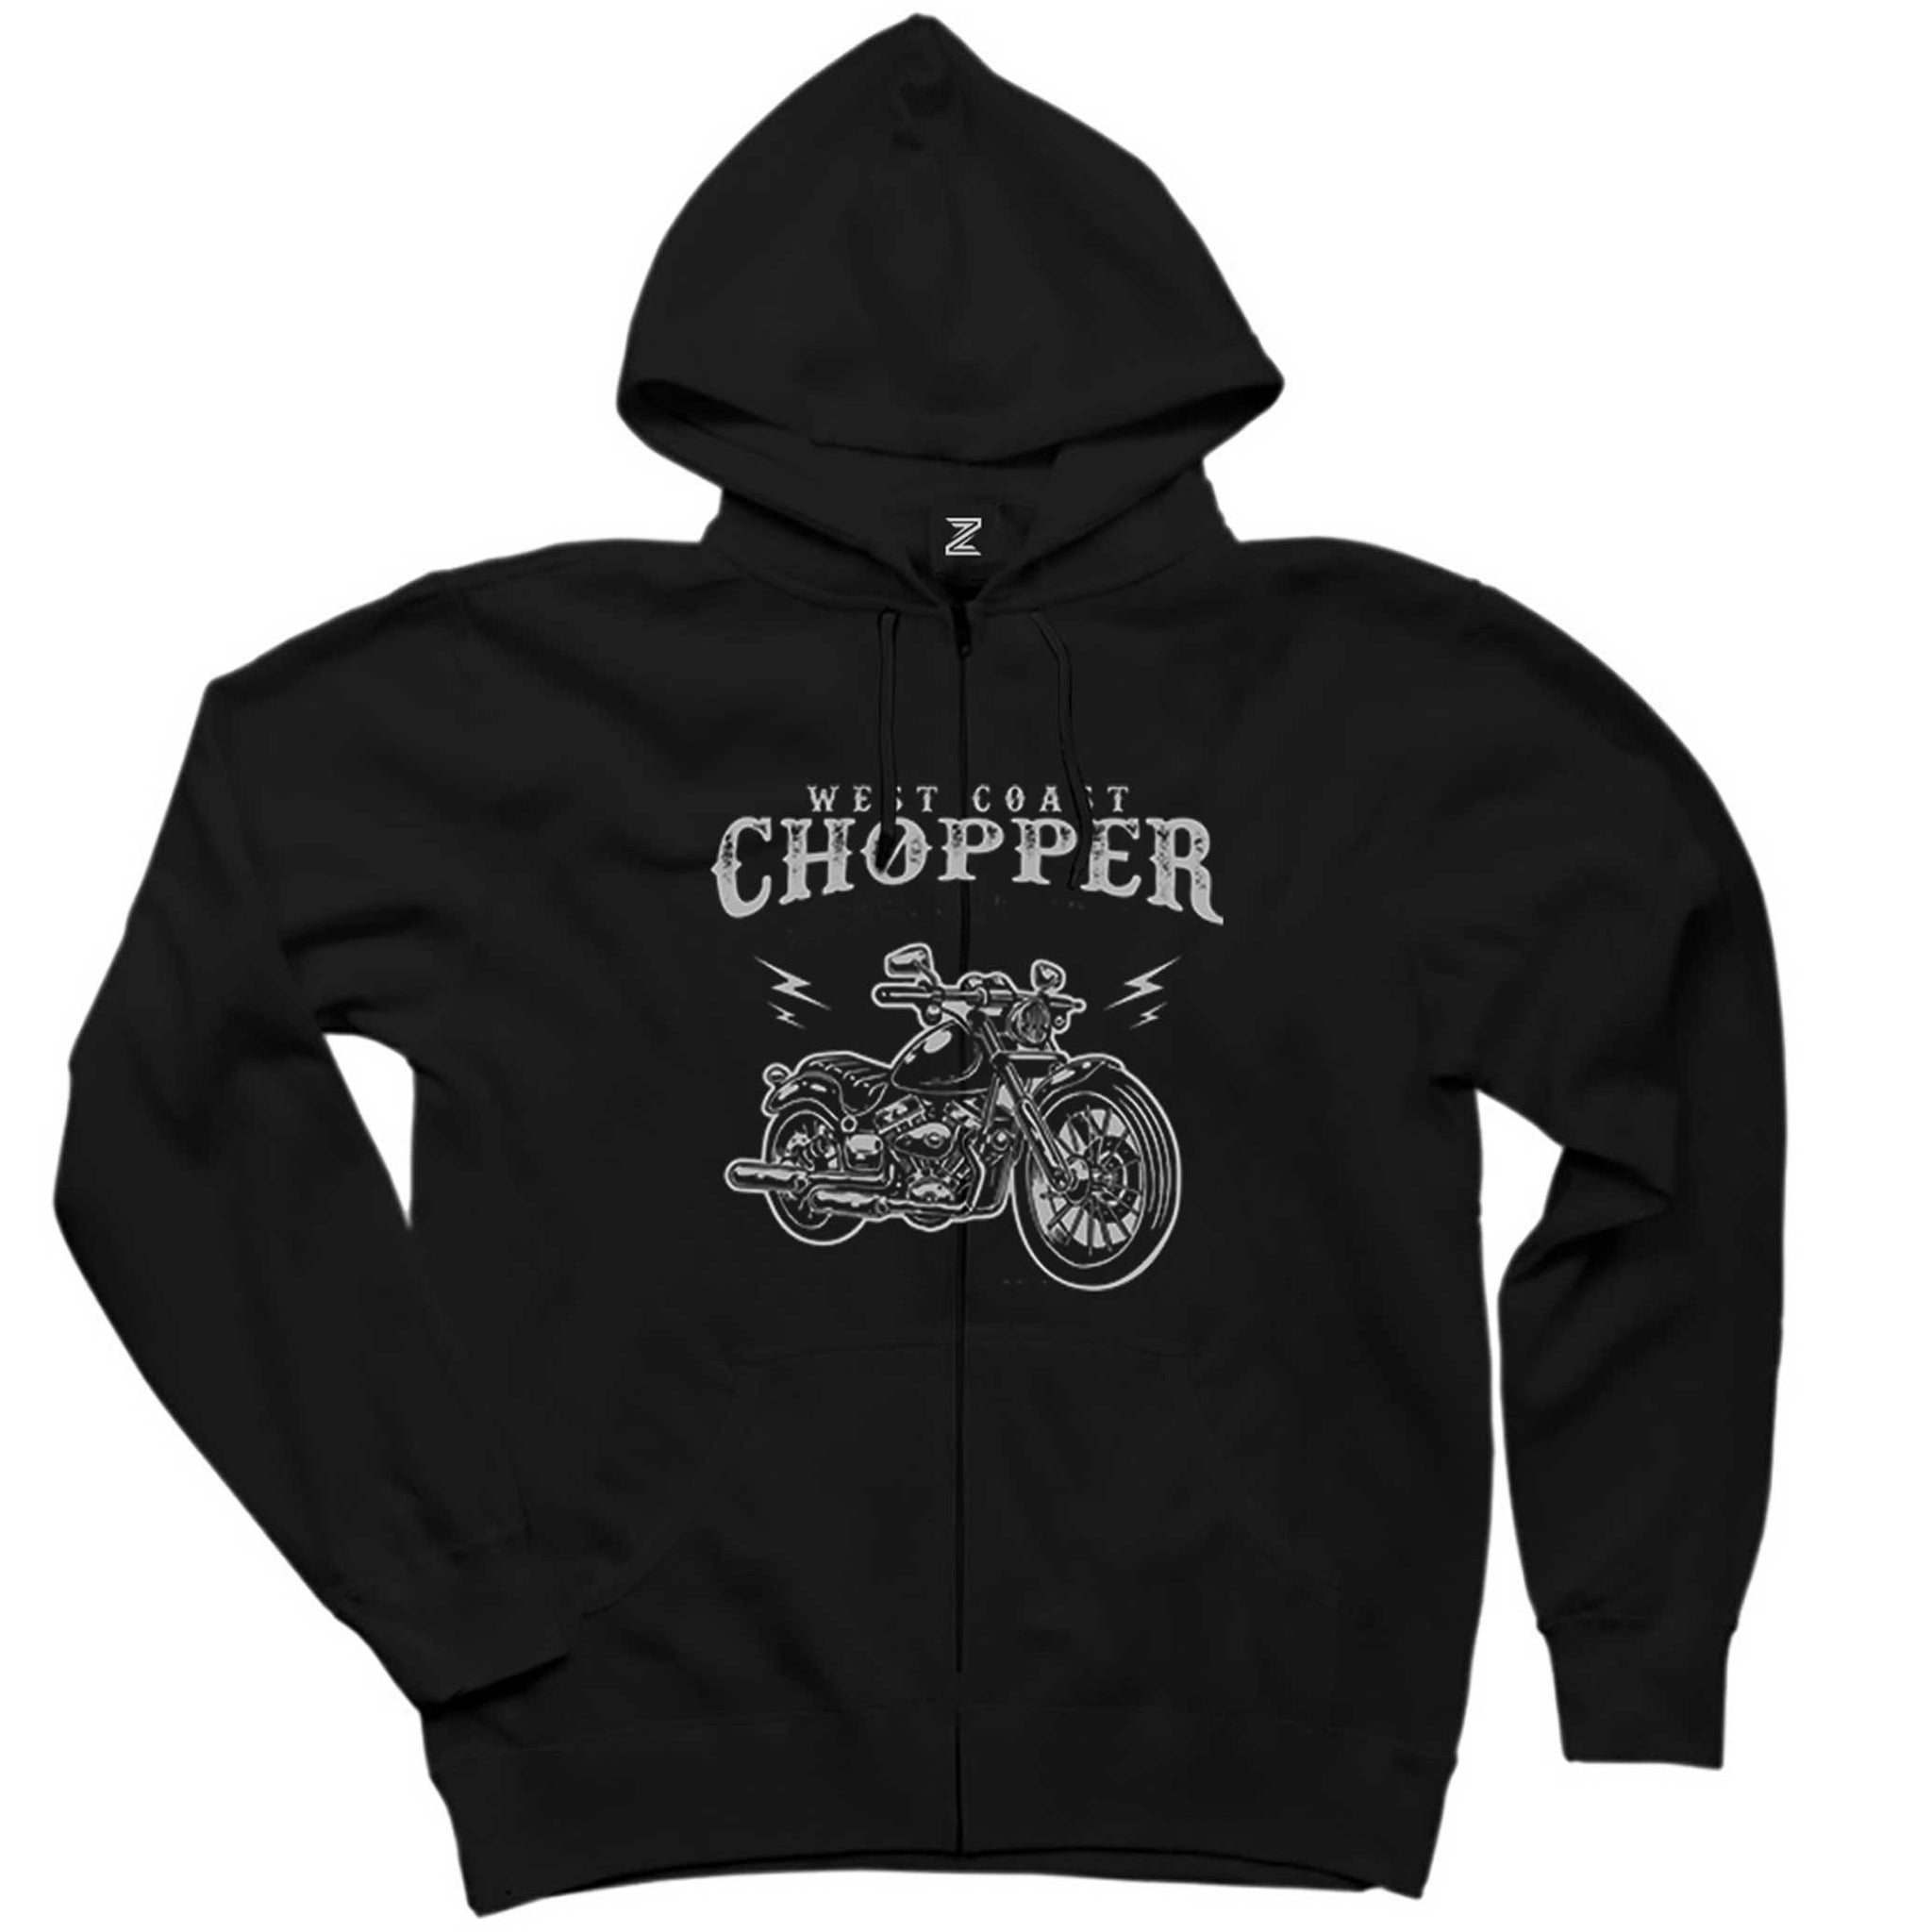 West Coast Choppers Customs Siyah Fermuarlı Kapşonlu Sweatshirt